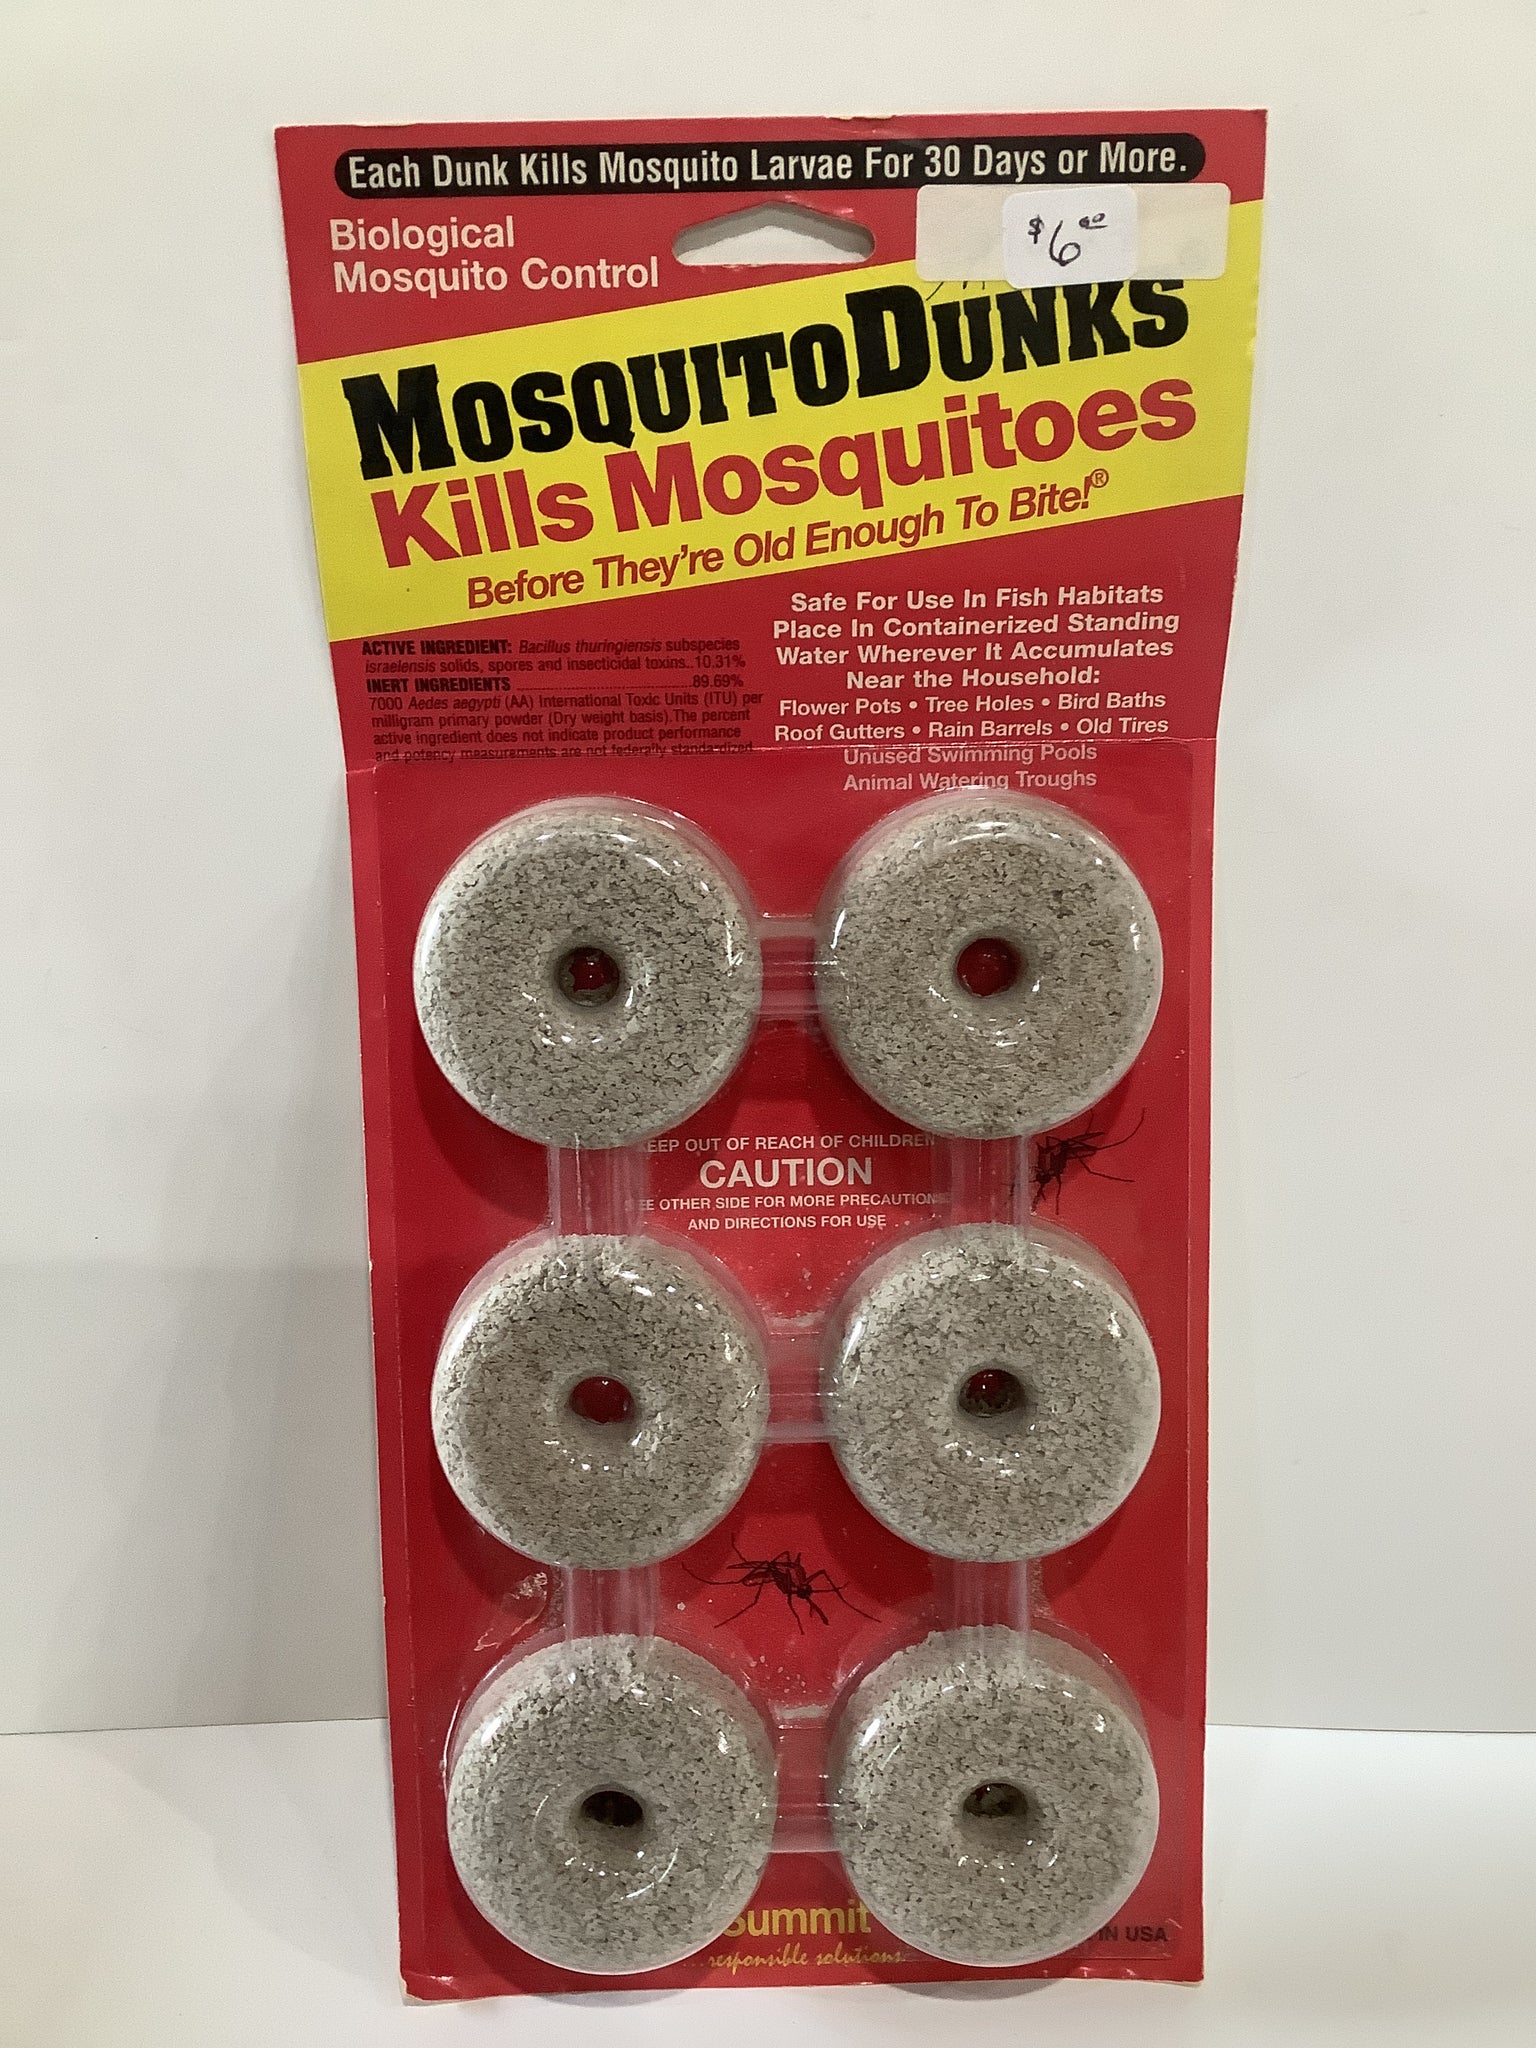 Mosquito dunks